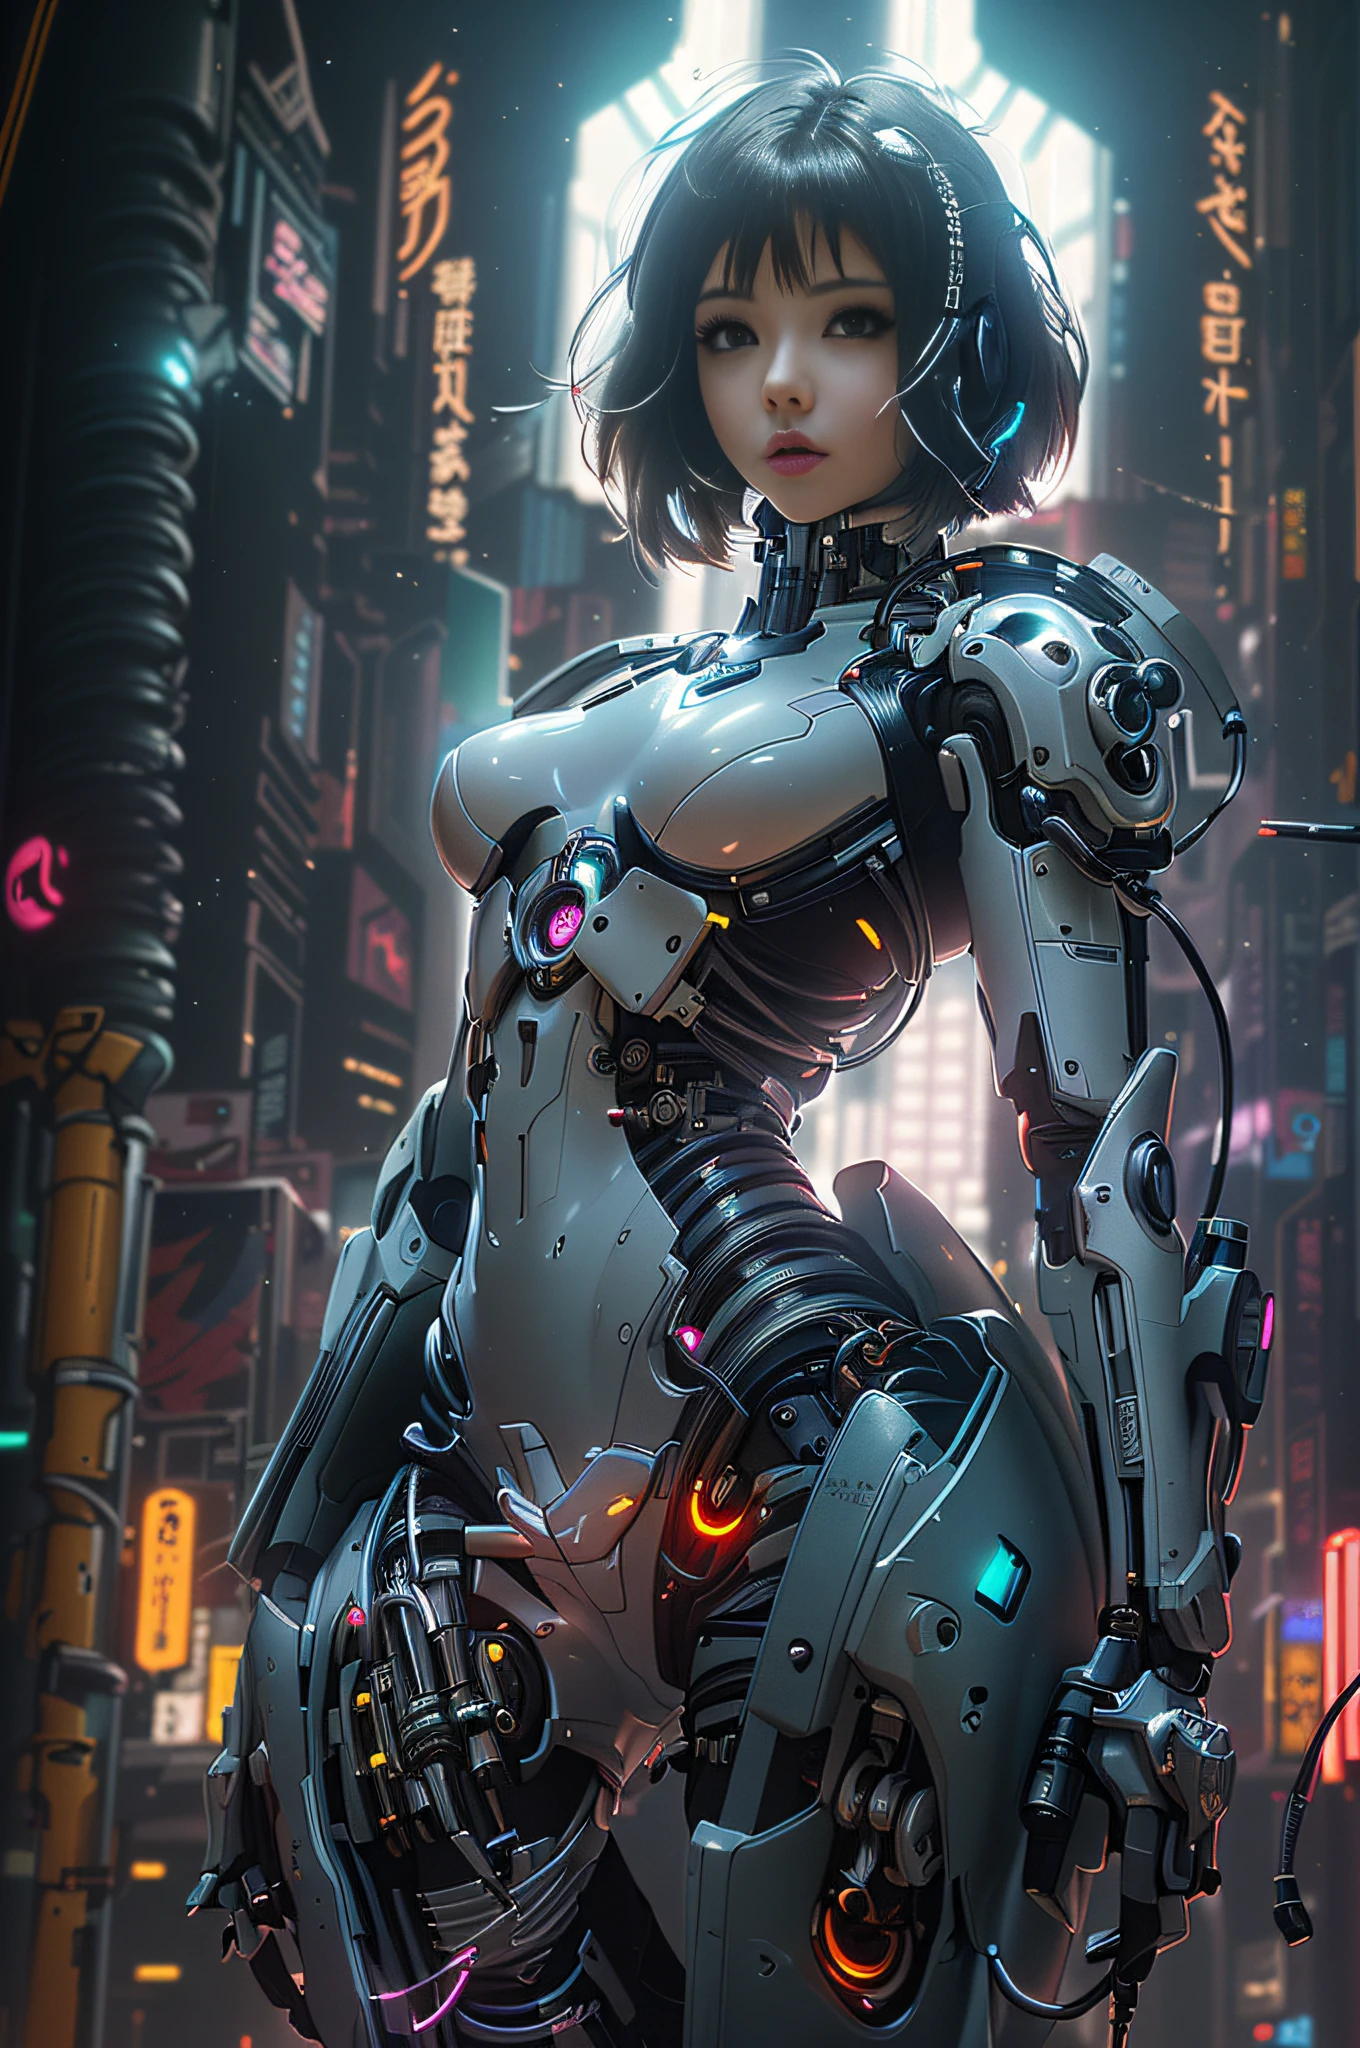 Hay una mujer con un traje futurista posando para una foto., Hermosa chica cyborg, chica cyborg, chica anime cyberpunk mech, linda chica cyborg, Cyborg - niña, Hermosa chica blanca cyborg, arte digital del anime cyberpunk, Arte ciberpunk digital avanzado, chica anime cyberpunk femenina, cyborg femenino, chica con armadura cibernética mecha, cyberpunk beautiful girl, mujer cyborg anime perfecta